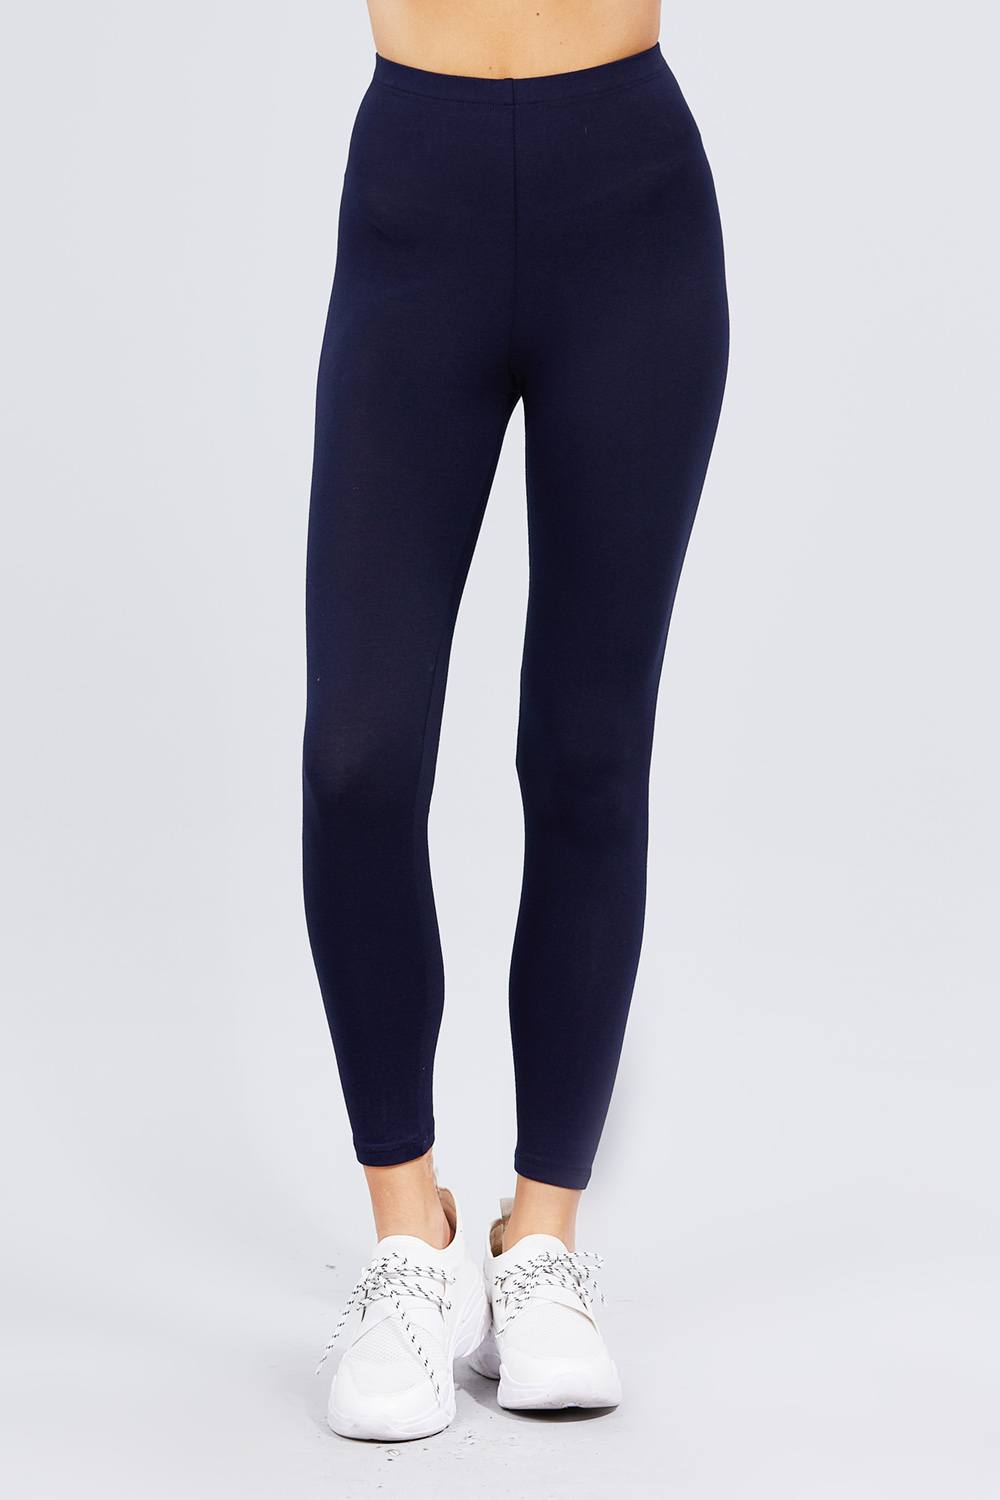 Cotton Spandex Jersey Long - True Navy / S Pants Girl Code